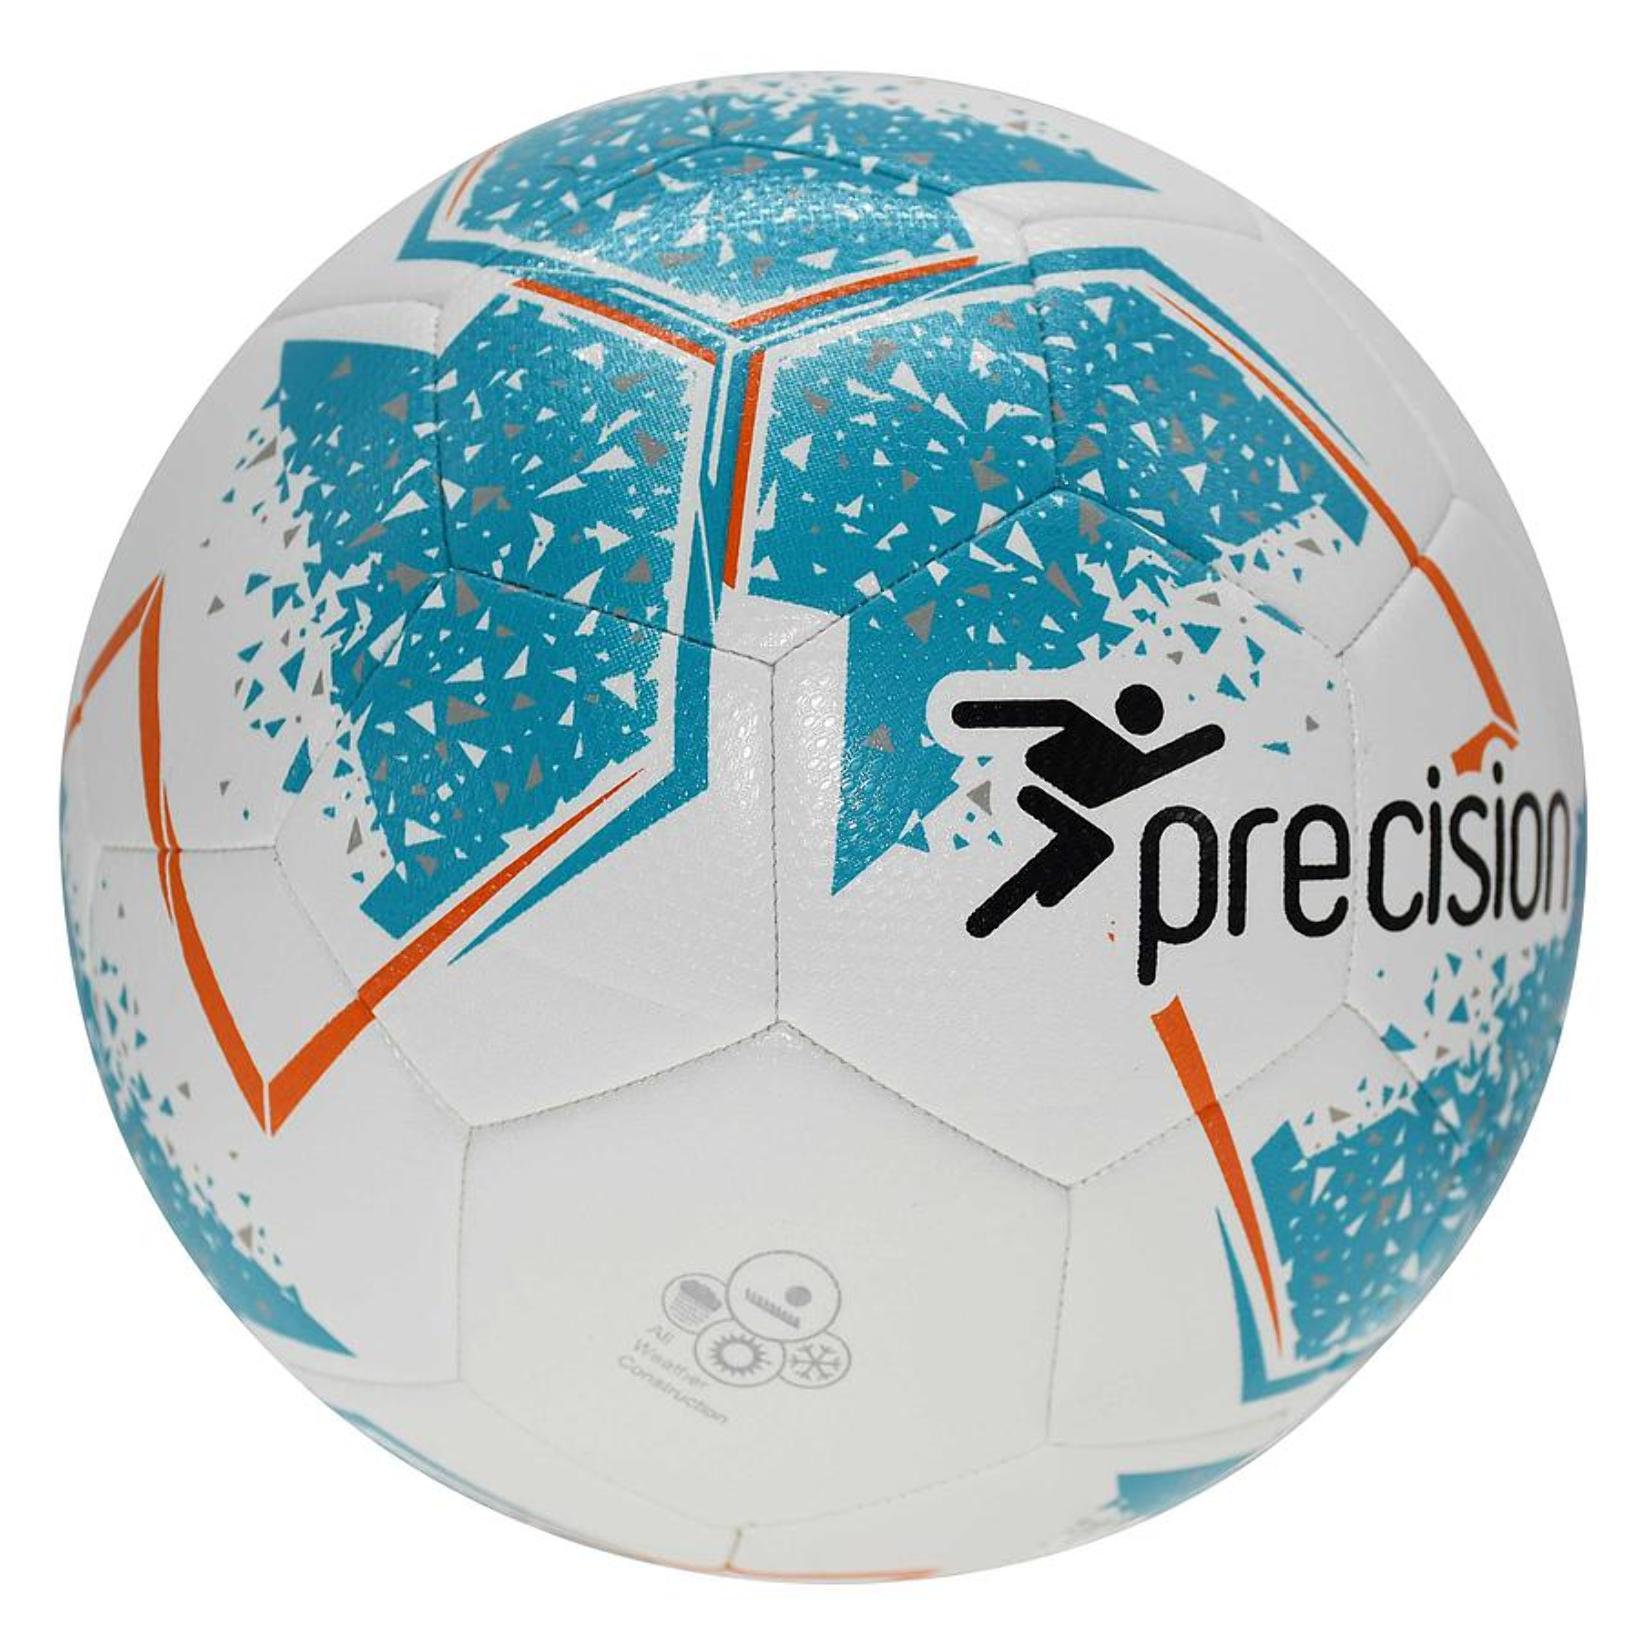 Precision Fusion IMS Training Ball White-Cyan-Orange-Grey